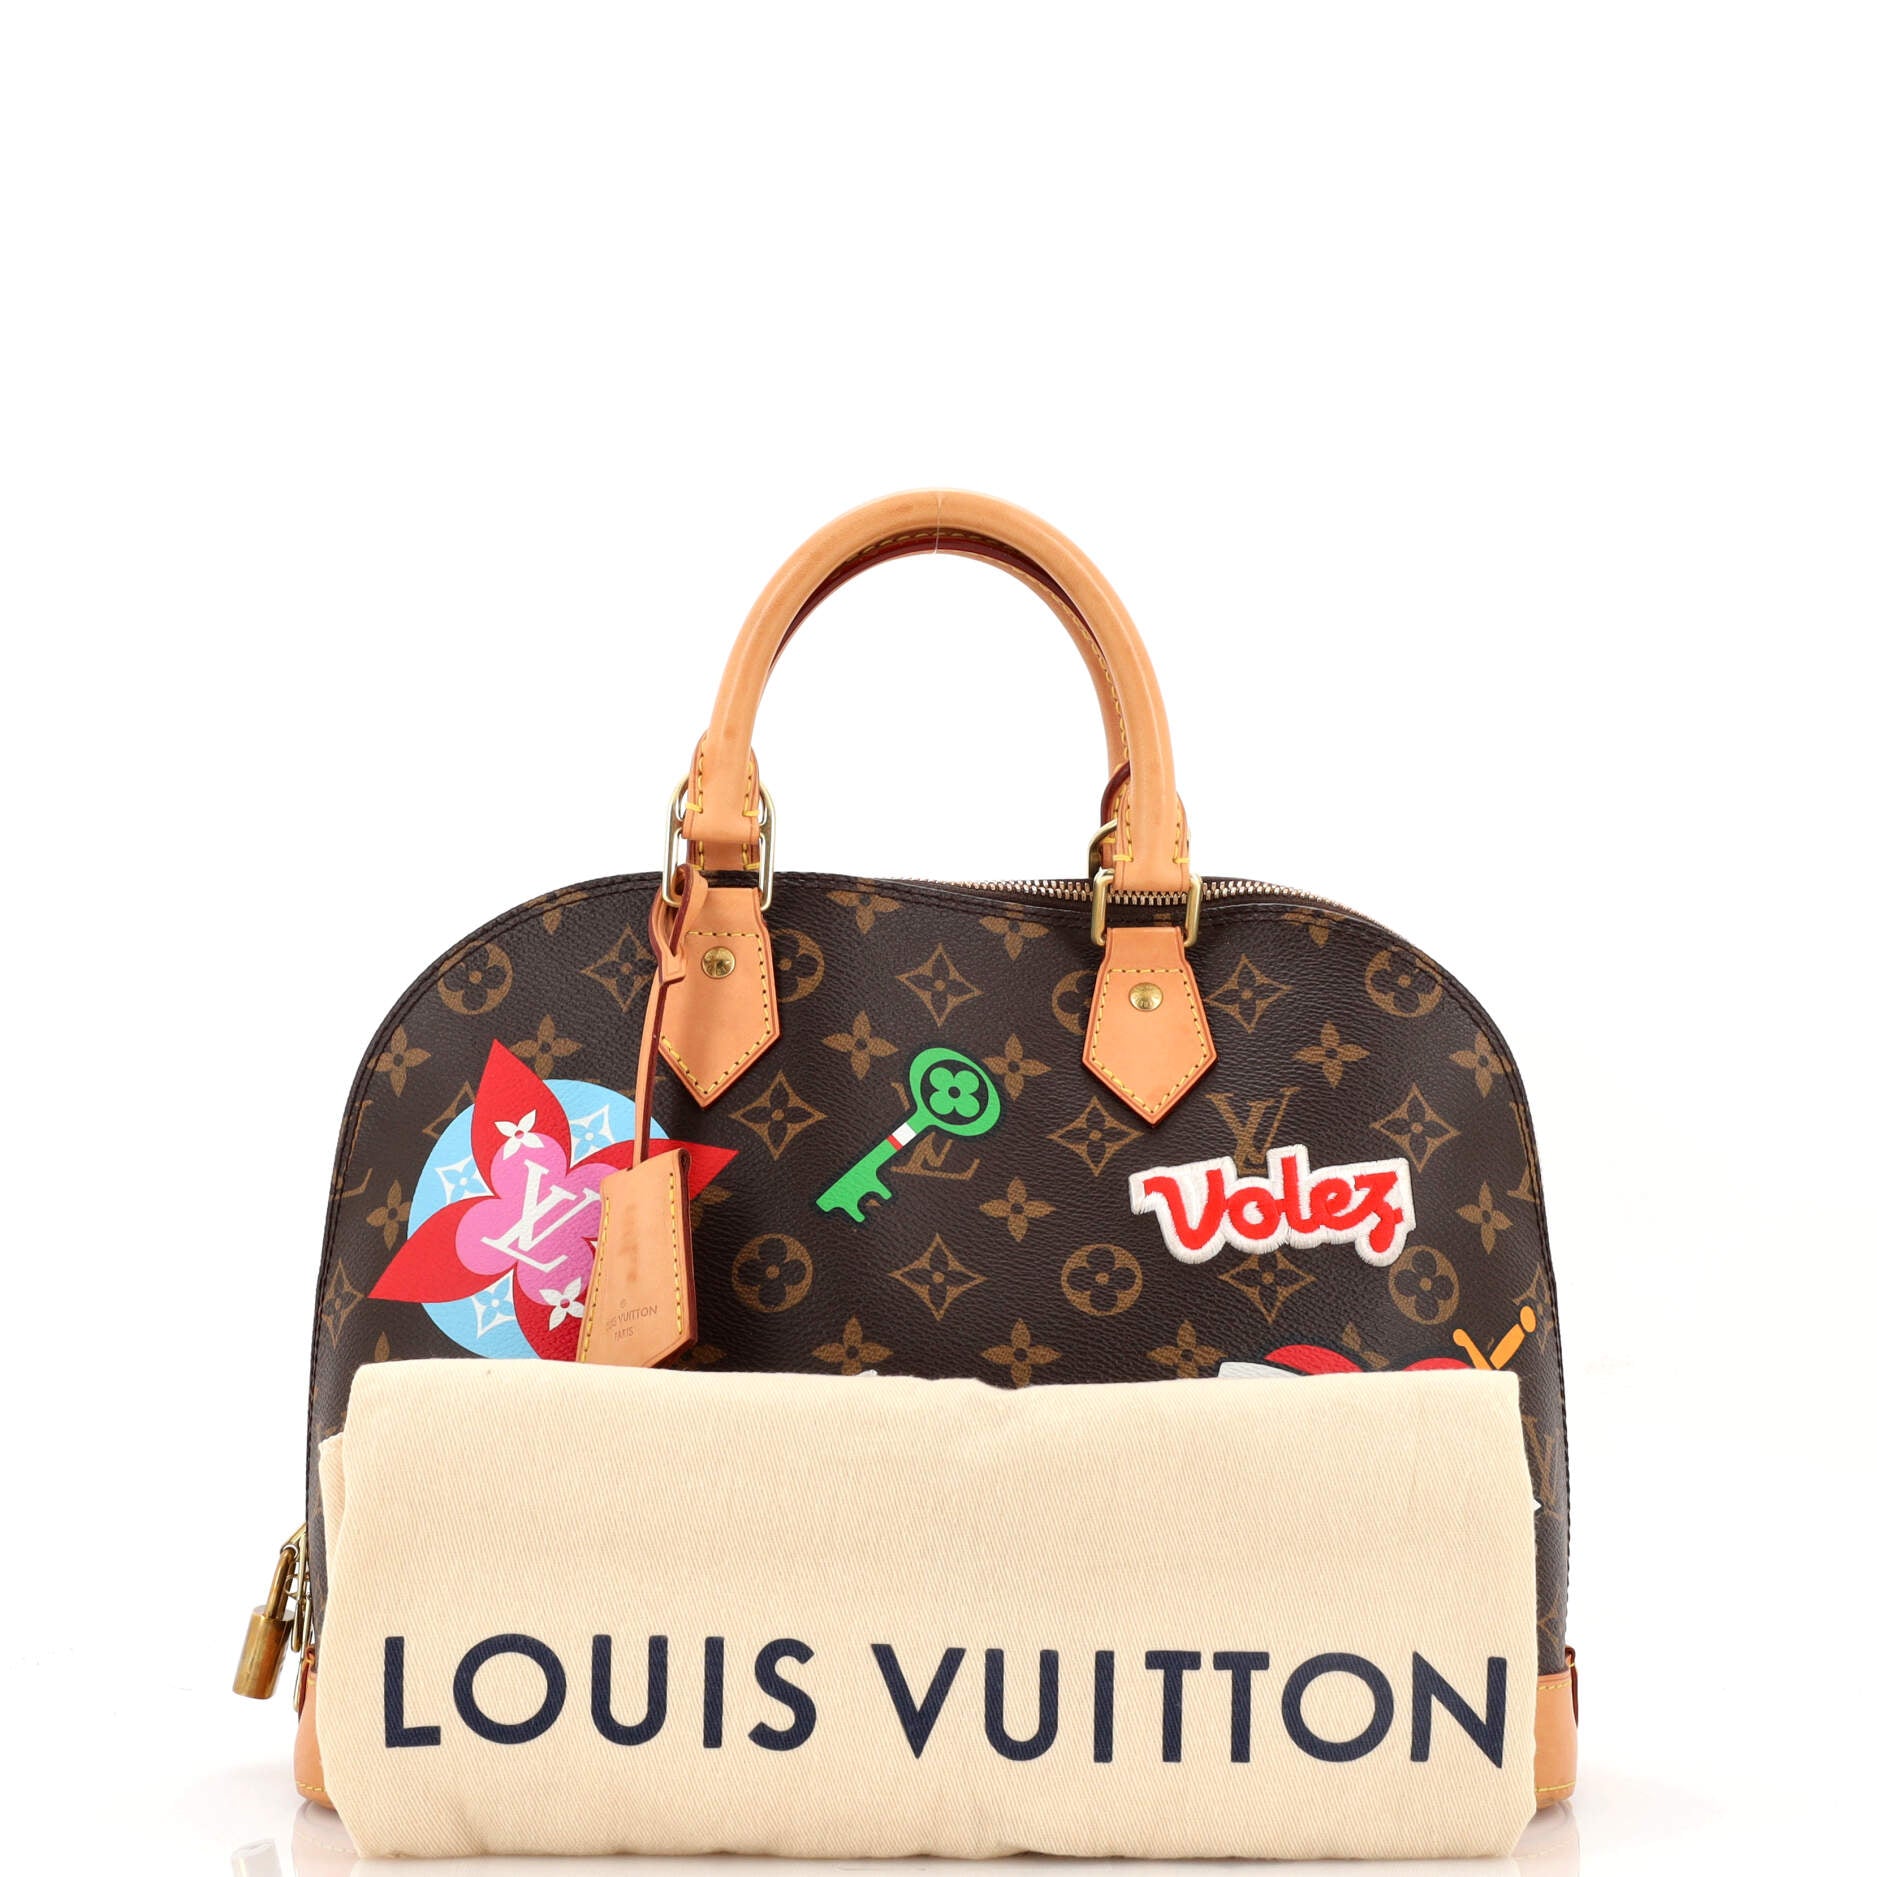 Louis Vuitton Alma Limited Edition Handbag